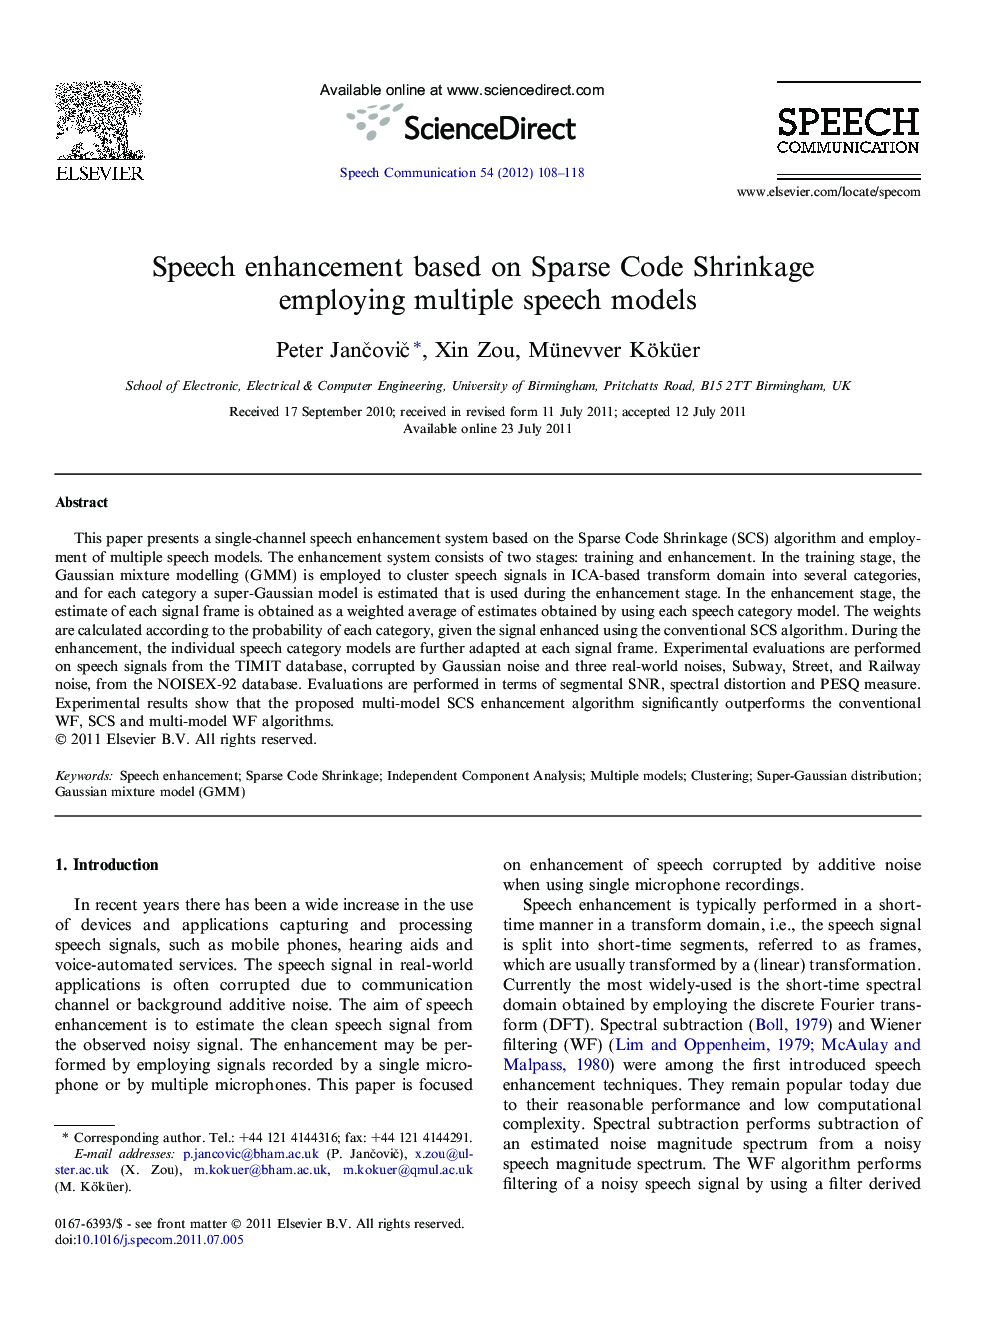 Speech enhancement based on Sparse Code Shrinkage employing multiple speech models